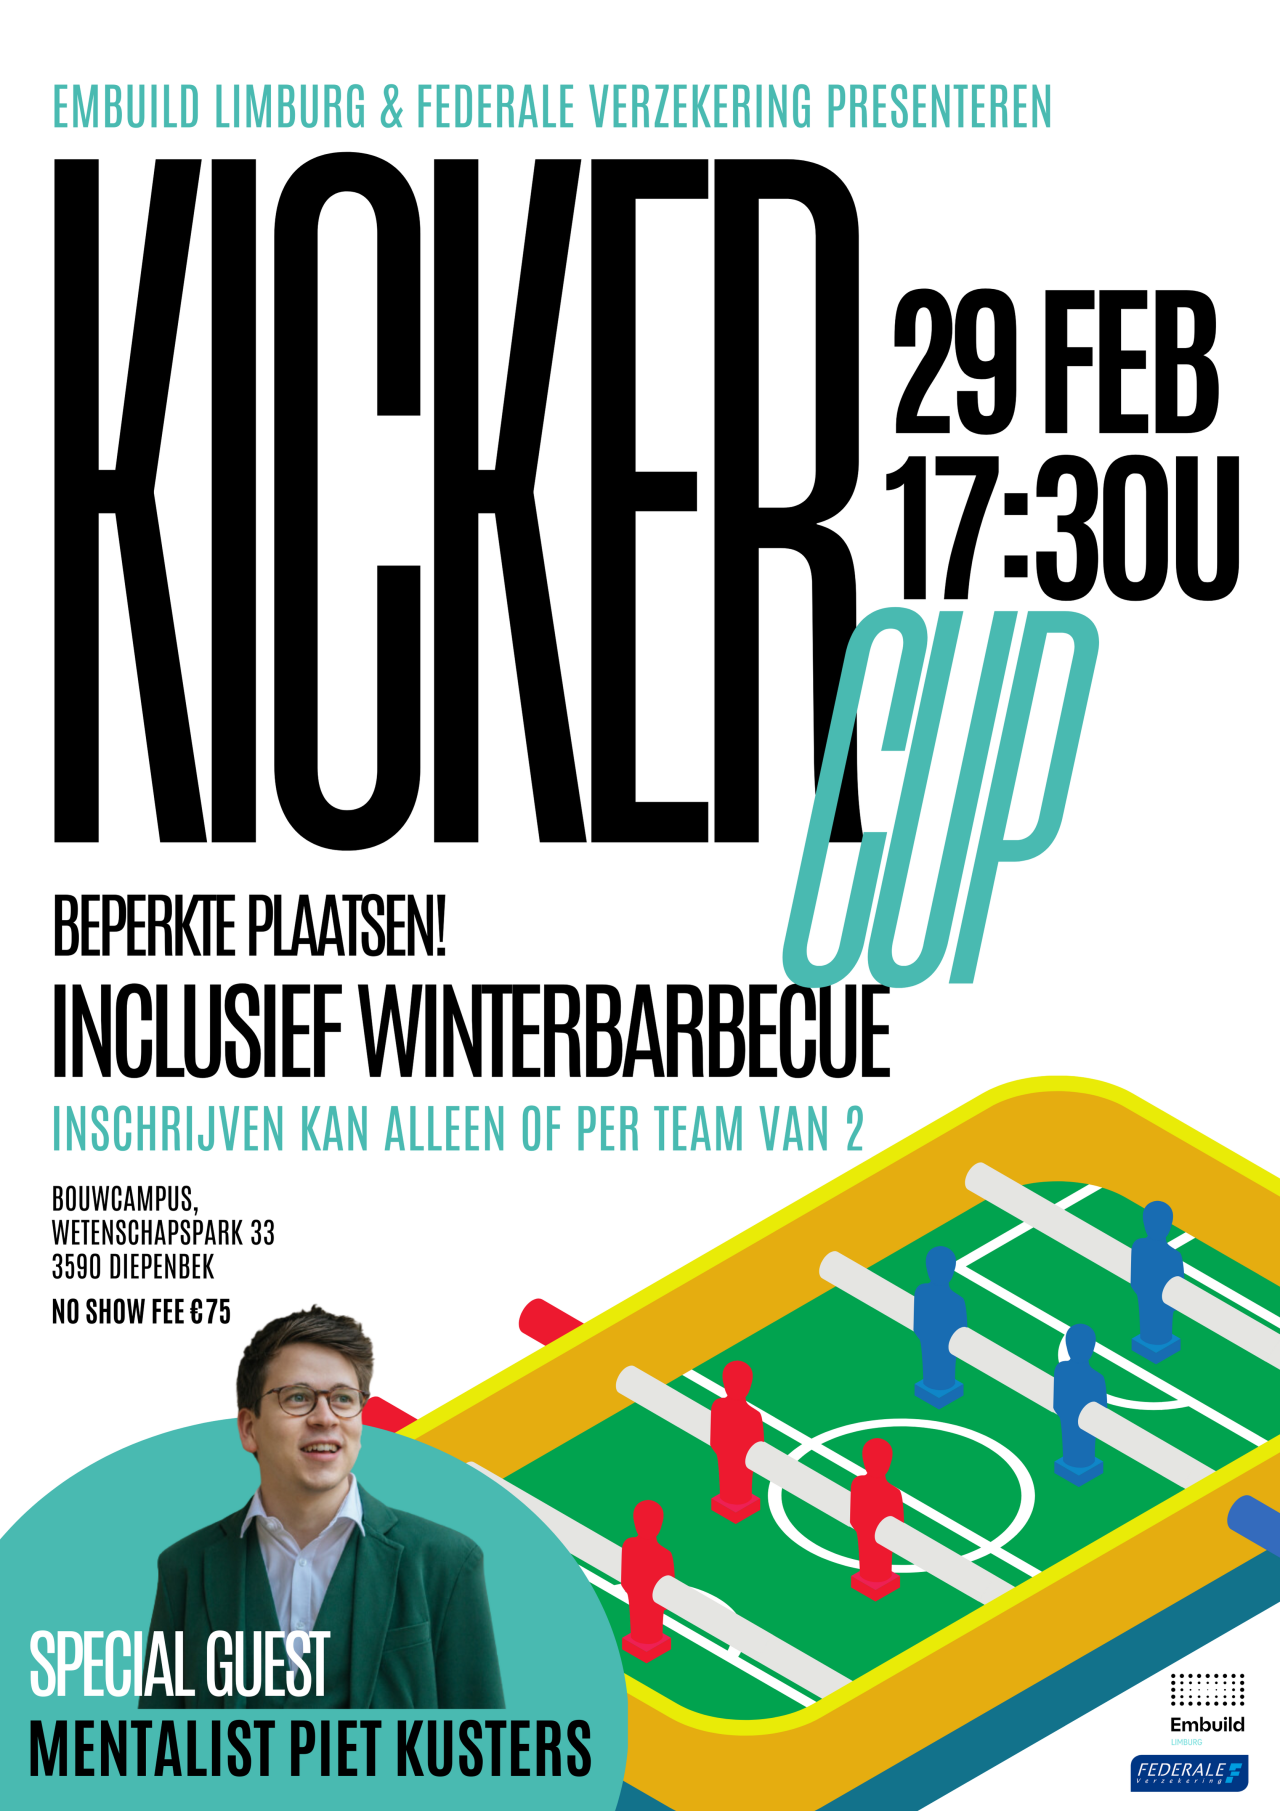 Uitnodiging Kickercup by Embuild Limburg en Federale Verzekering 29 februari 2024